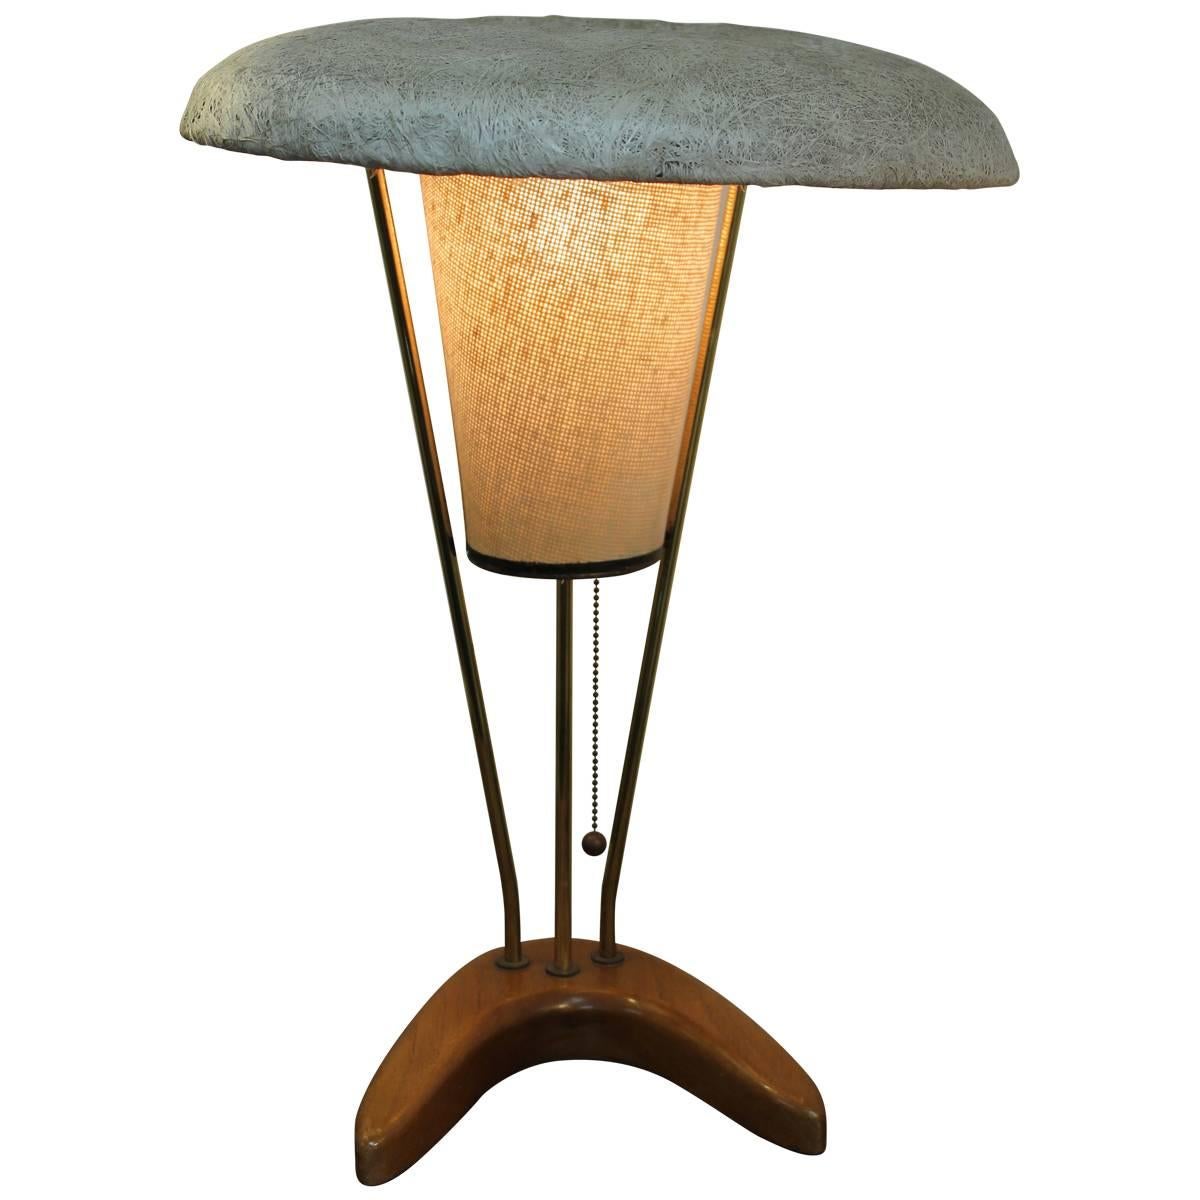 1950s Modern Table Lamp Spun Fiberglas Shade